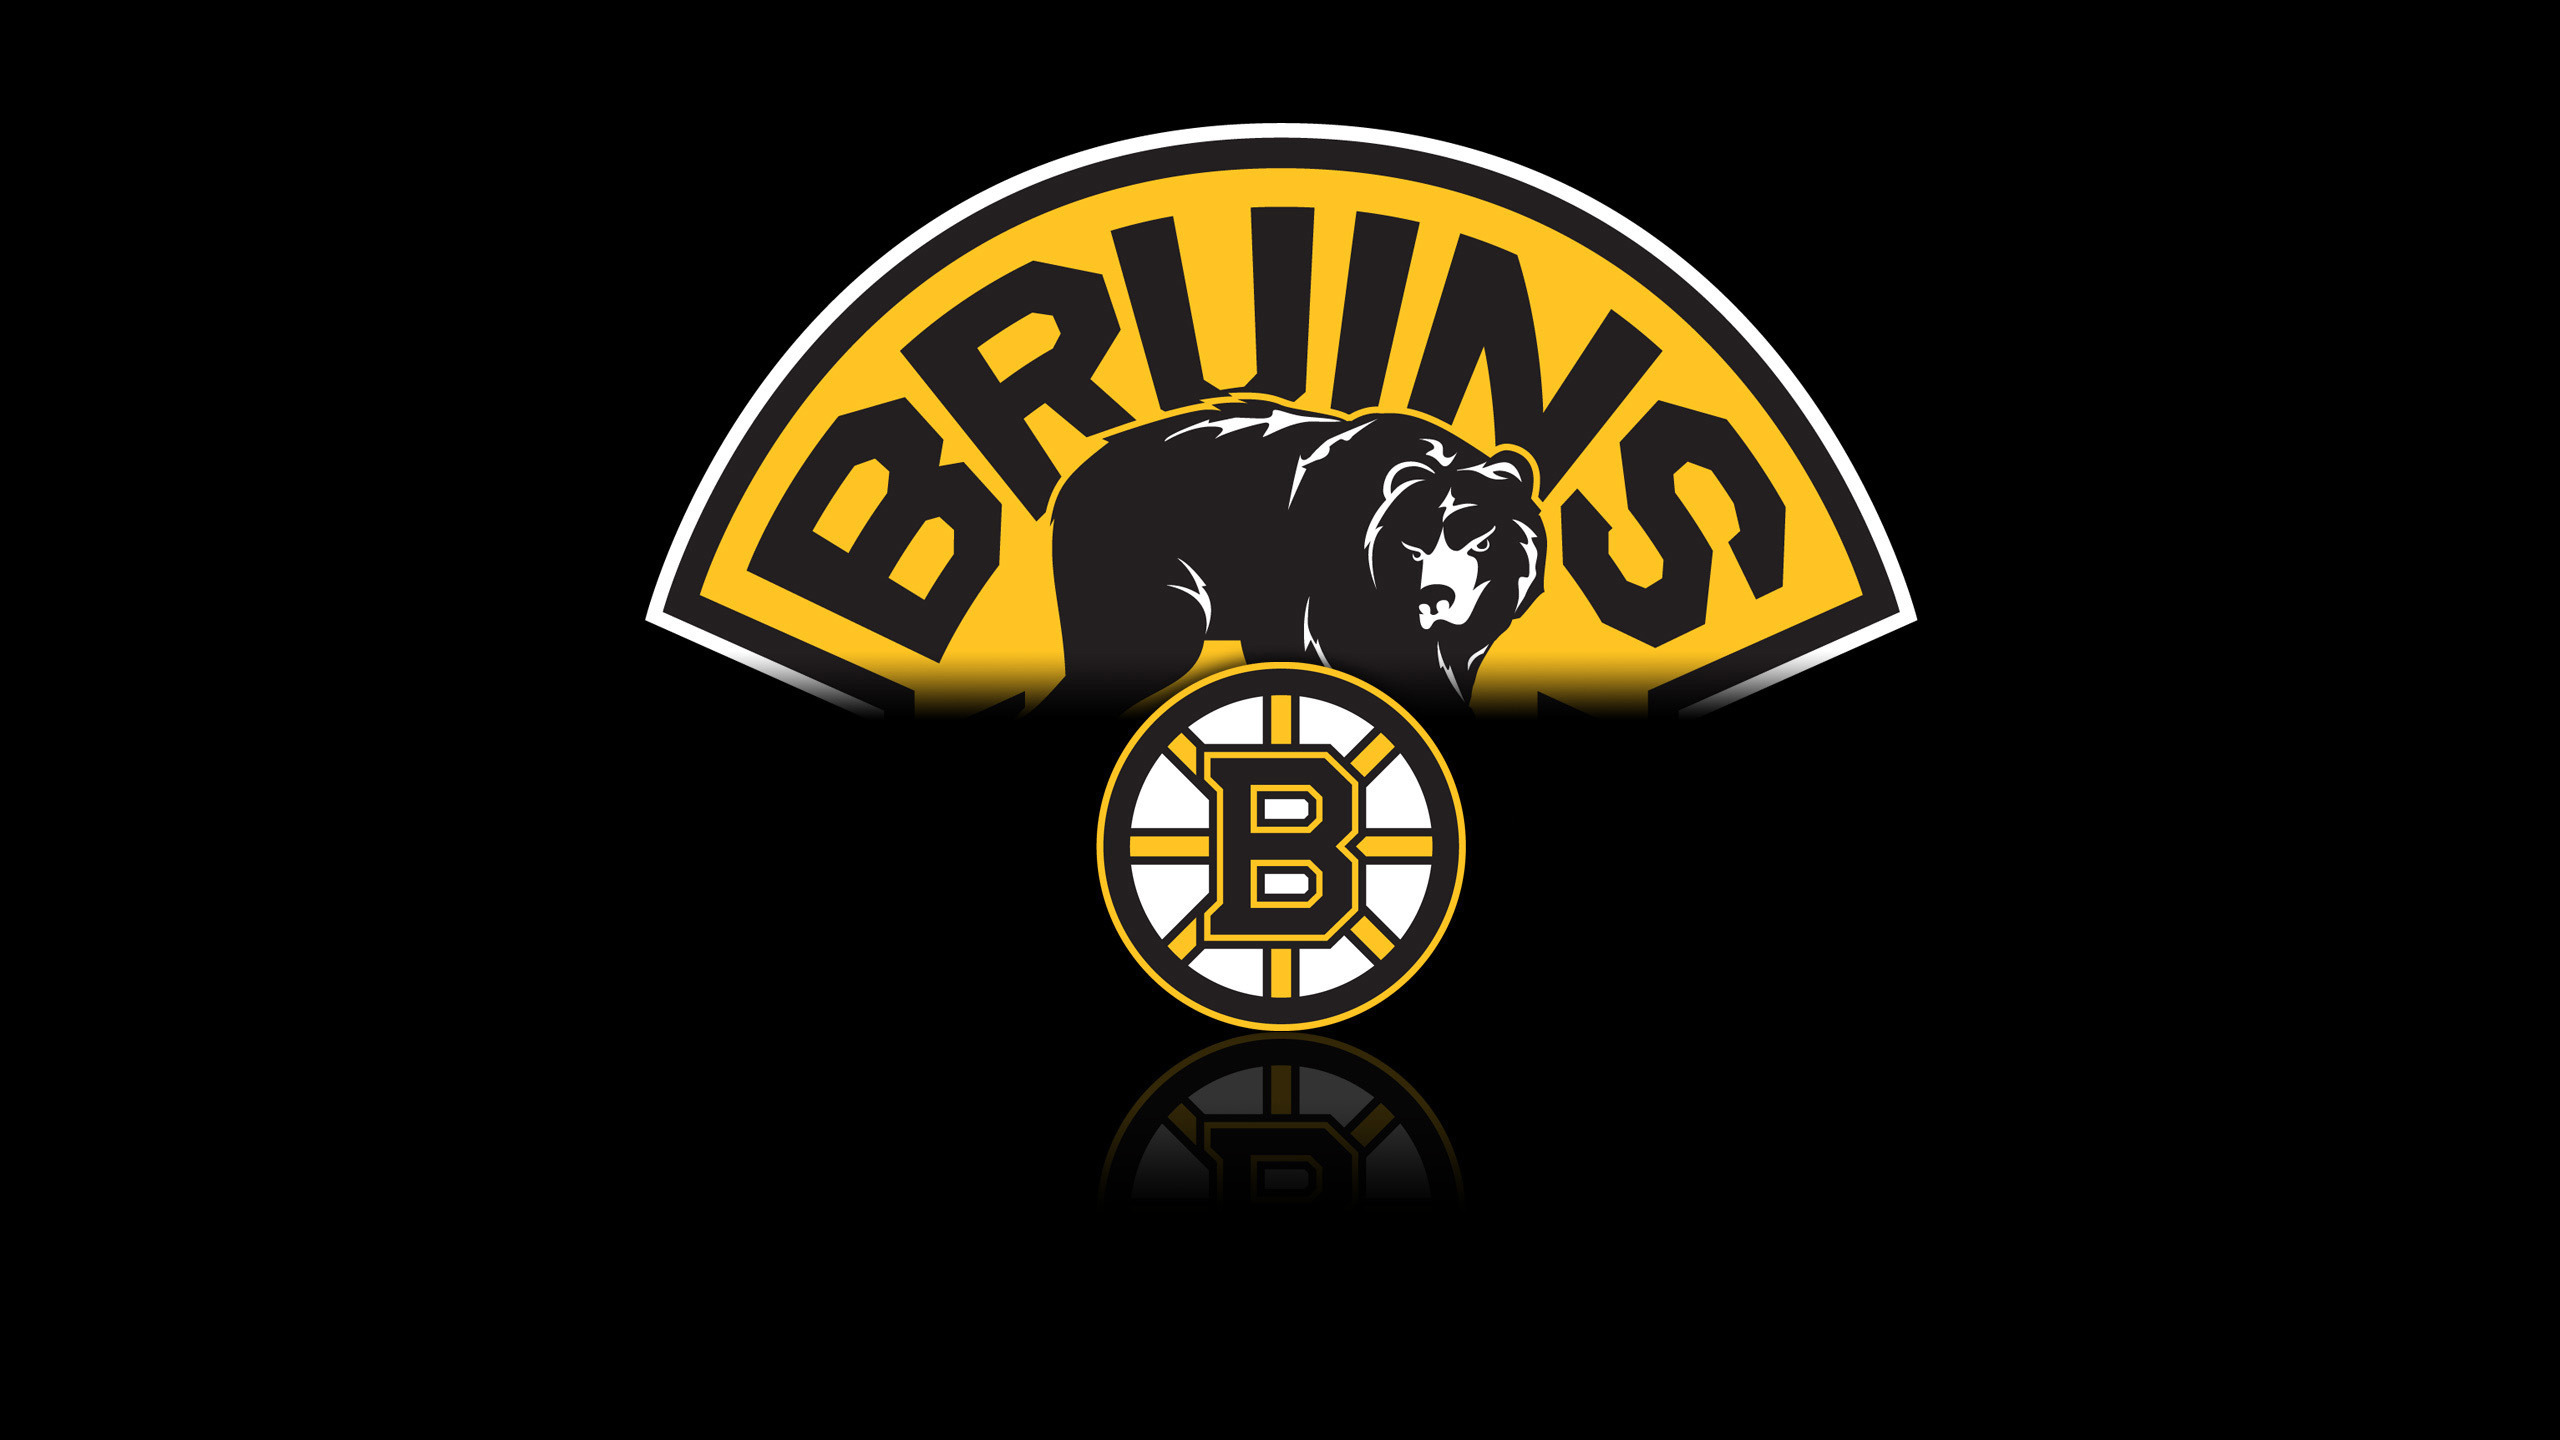 Nhl Boston Bruins Logo Black Wallpaper In Hockey